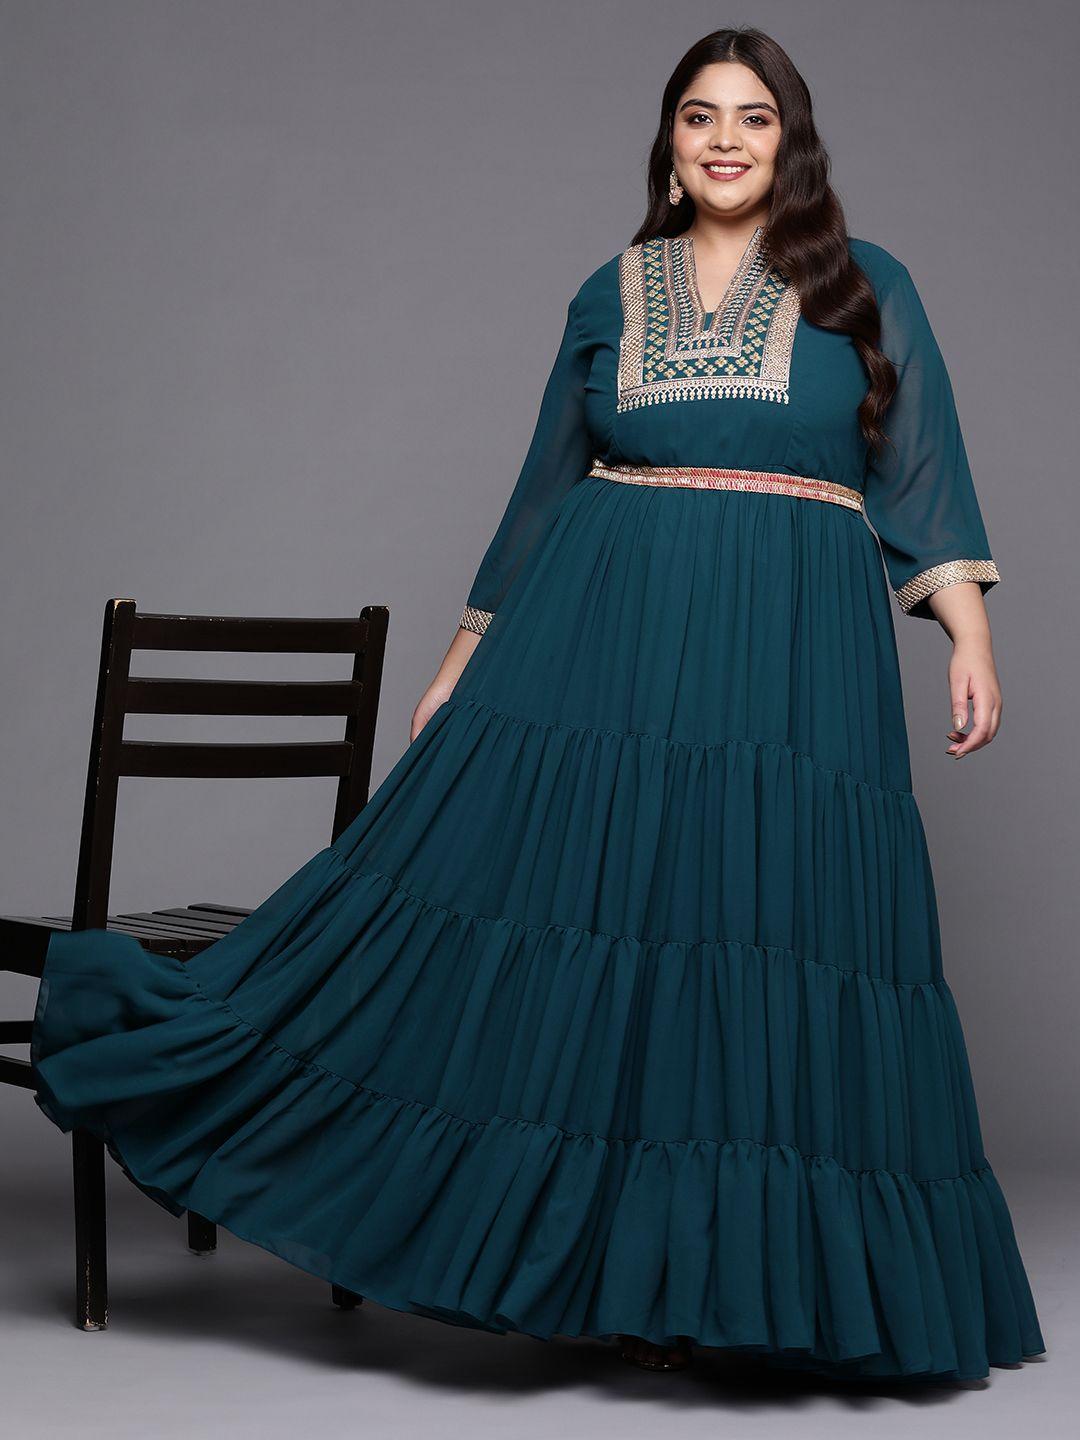 inddus plus women plus size yoke design embroidered ethnic maxi gown